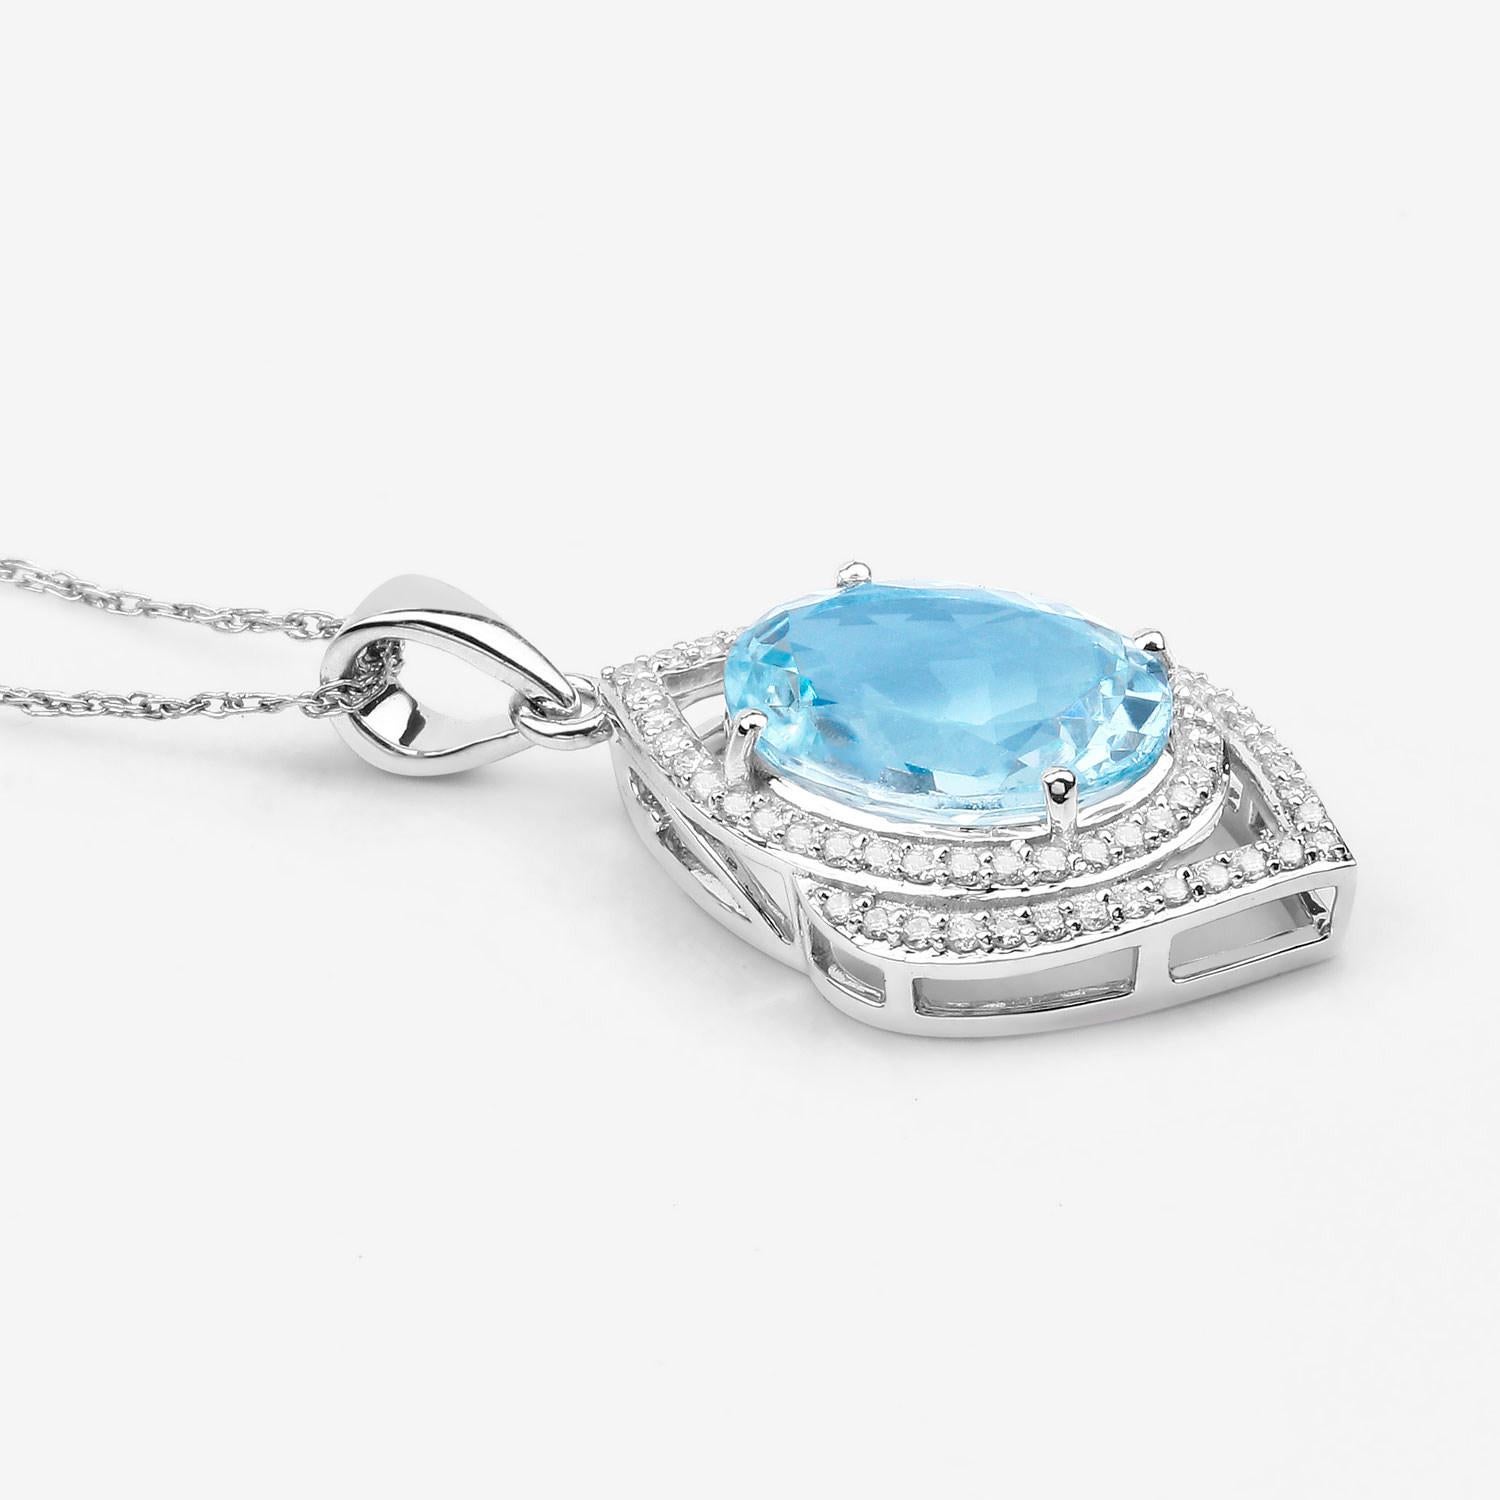 Contemporary Oval Cut Aquamarine Pendant Necklace Diamond Setting 3.86 Carats 14K White Gold For Sale